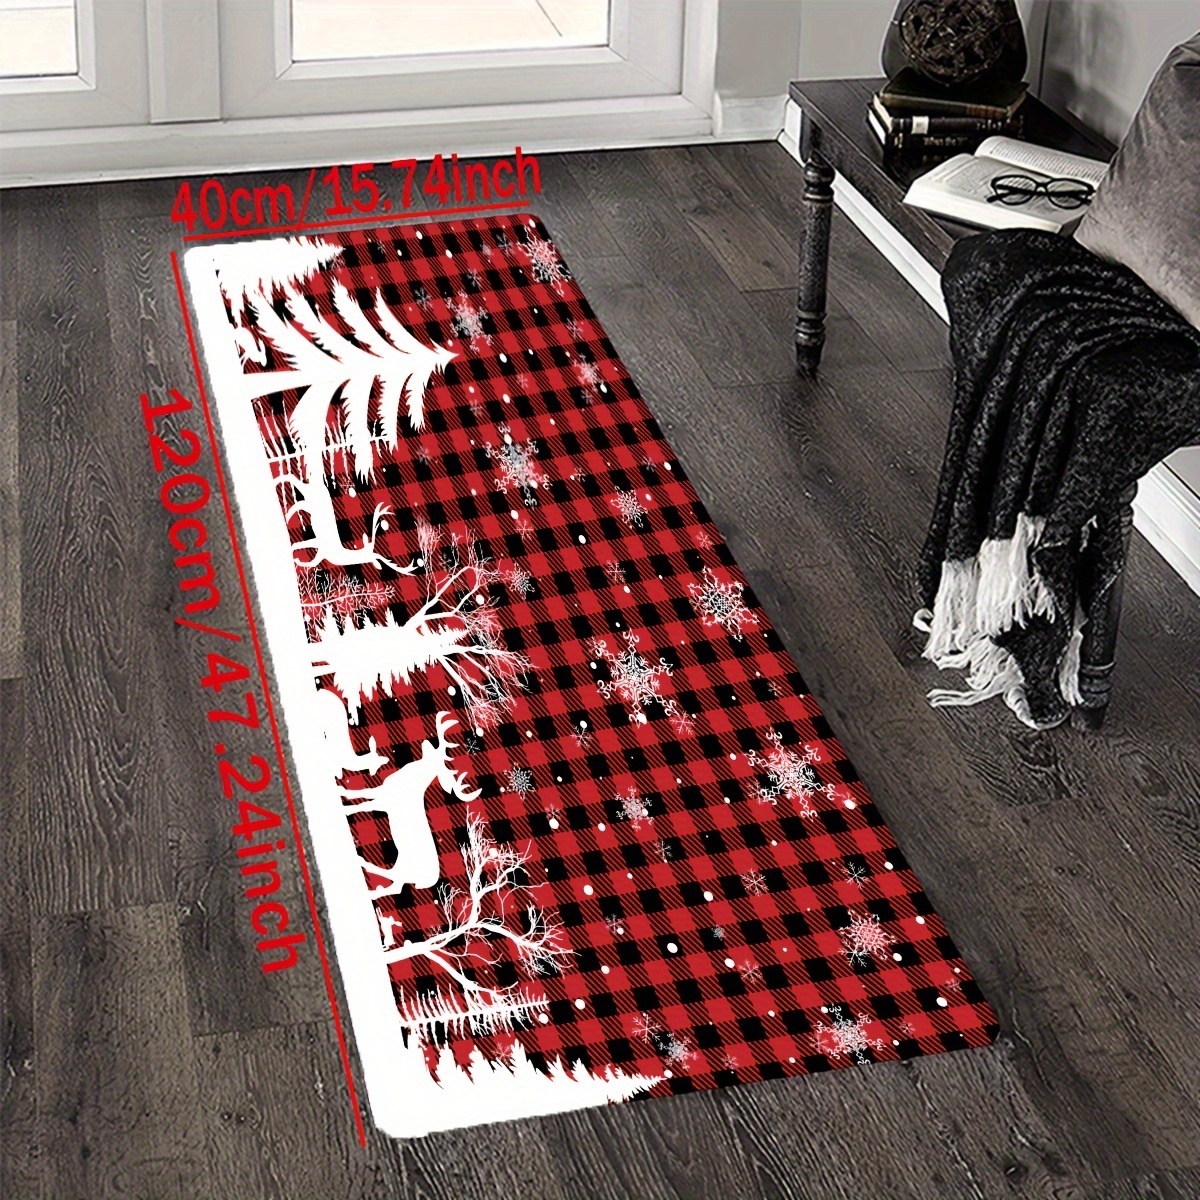 Kitchen Floor Mat Anti-slip Carpet Washable Long Kitchen Rug Mat